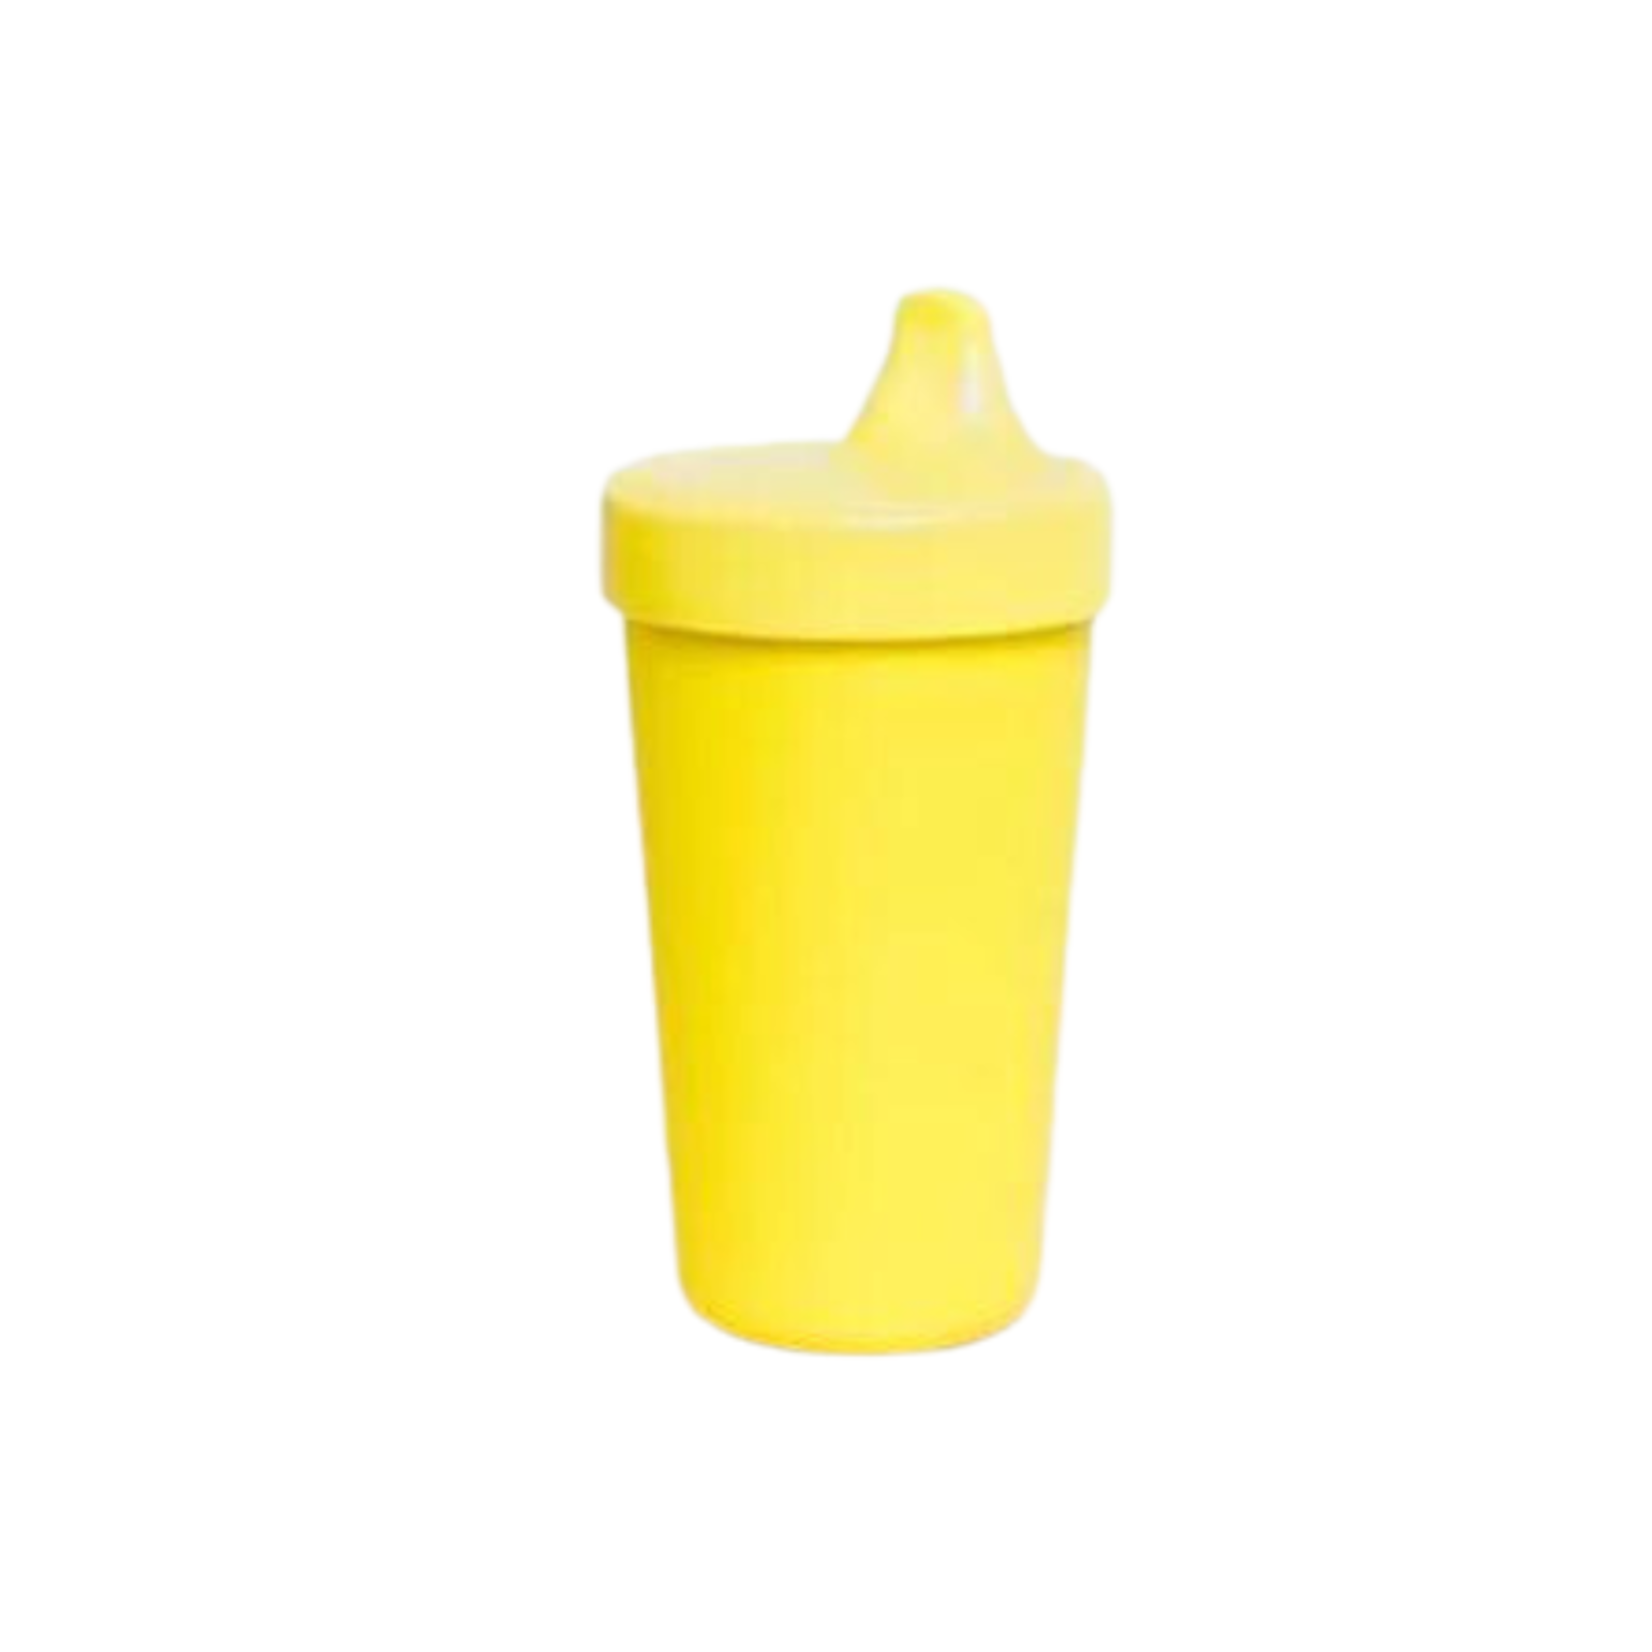 https://cdn.shoplightspeed.com/shops/643266/files/54438938/1652x1652x1/replay-replay-sippy-cups-yellow.jpg